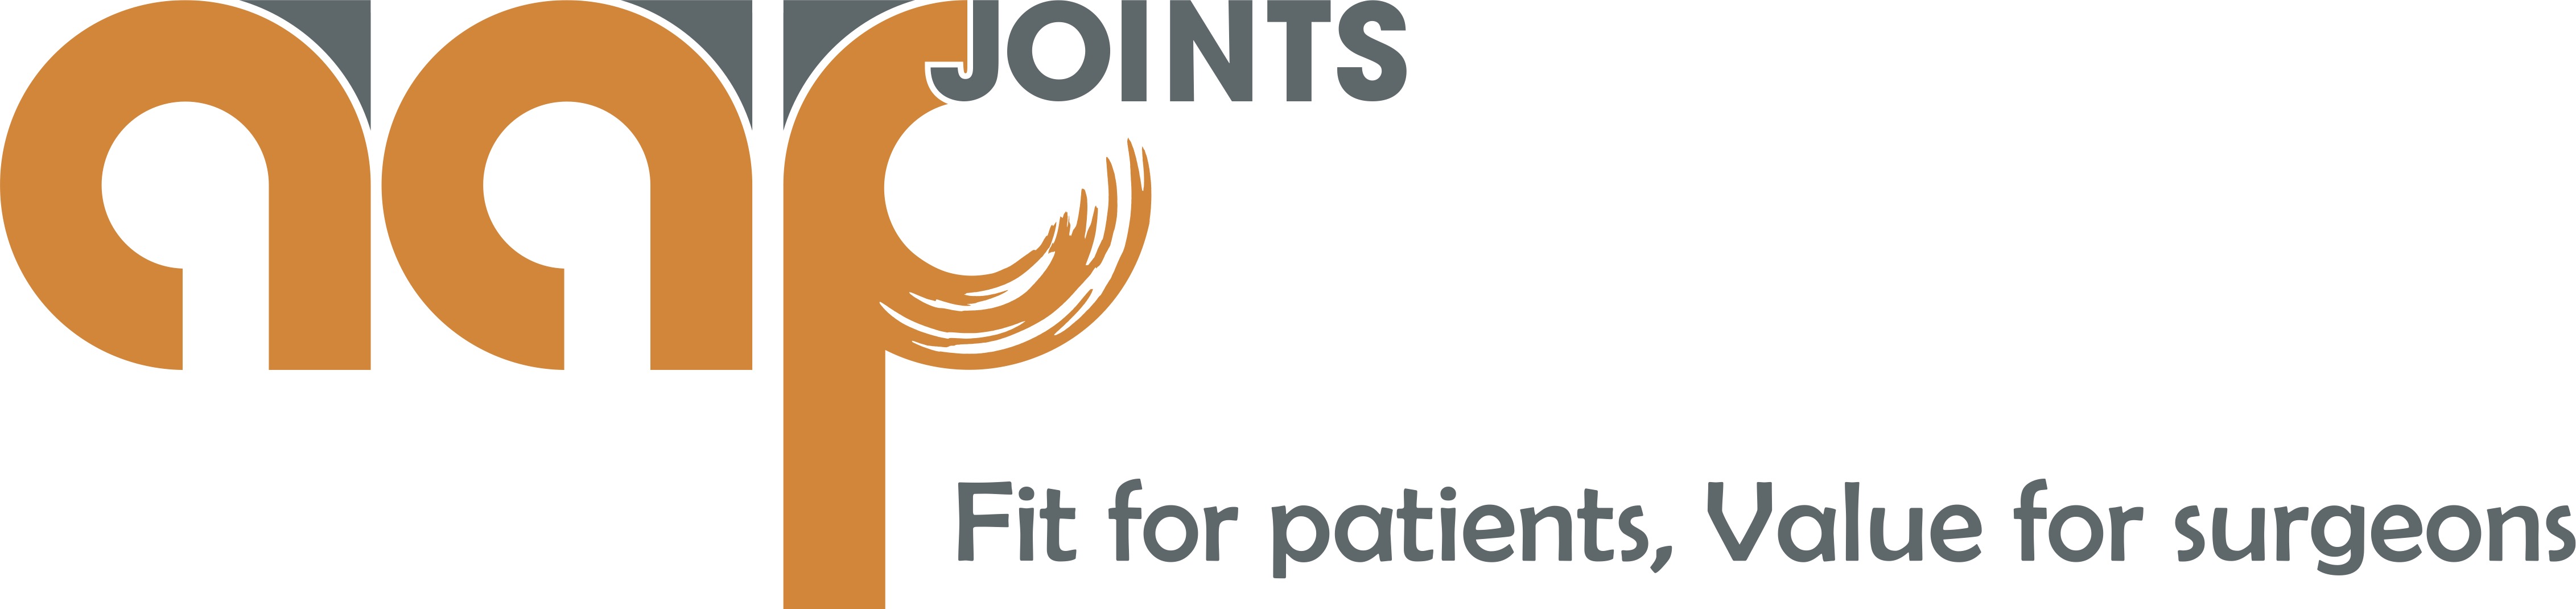 aap Joints GmbH logo